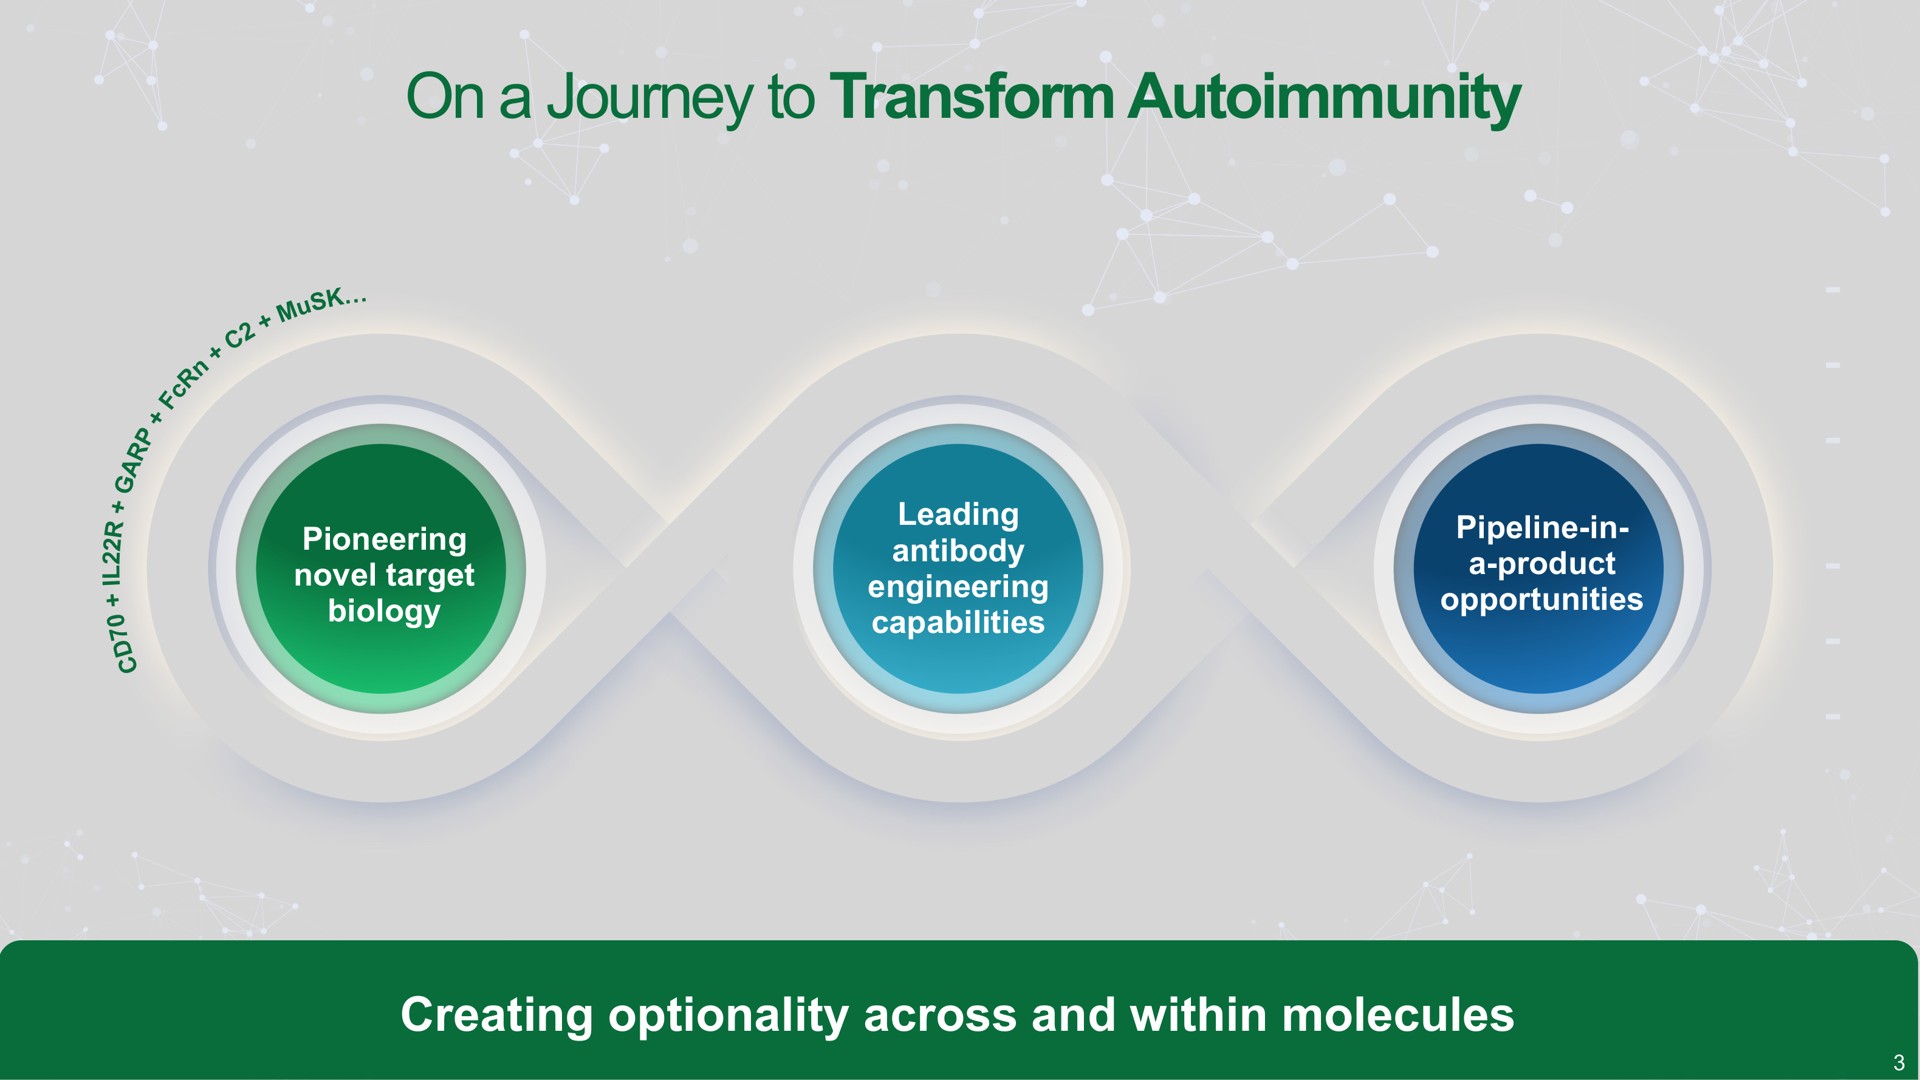 on a journey to transform autoimmunity | argenx SE